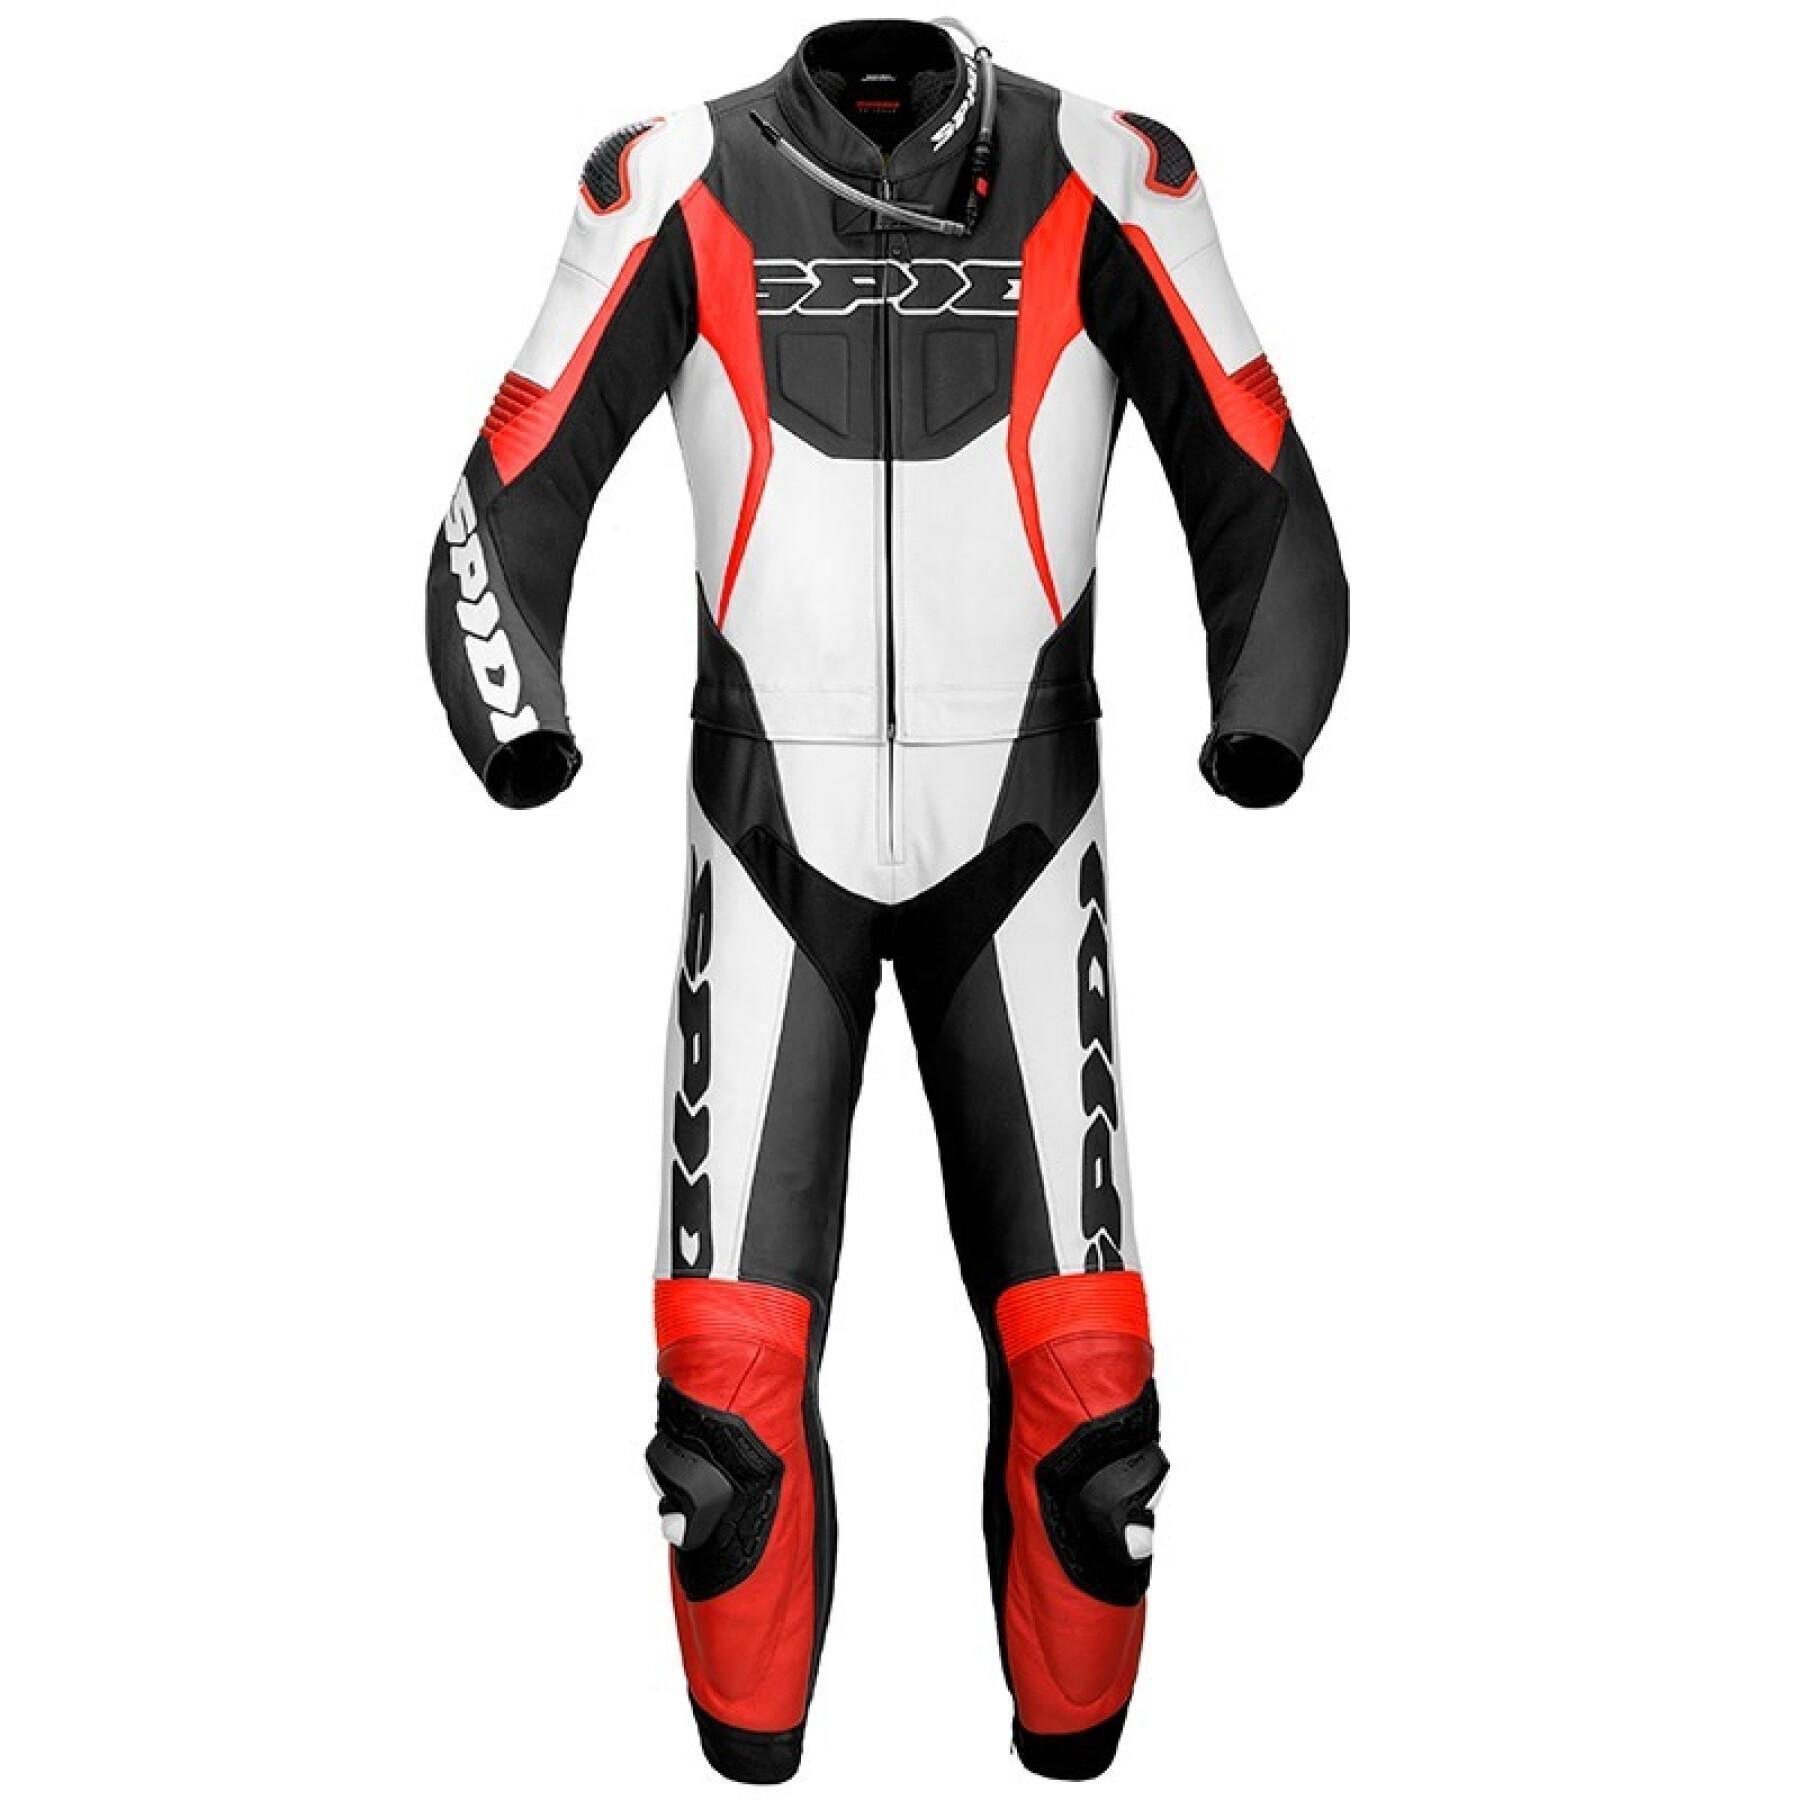 Leather motorcycle suit Spidi sport warrior tour